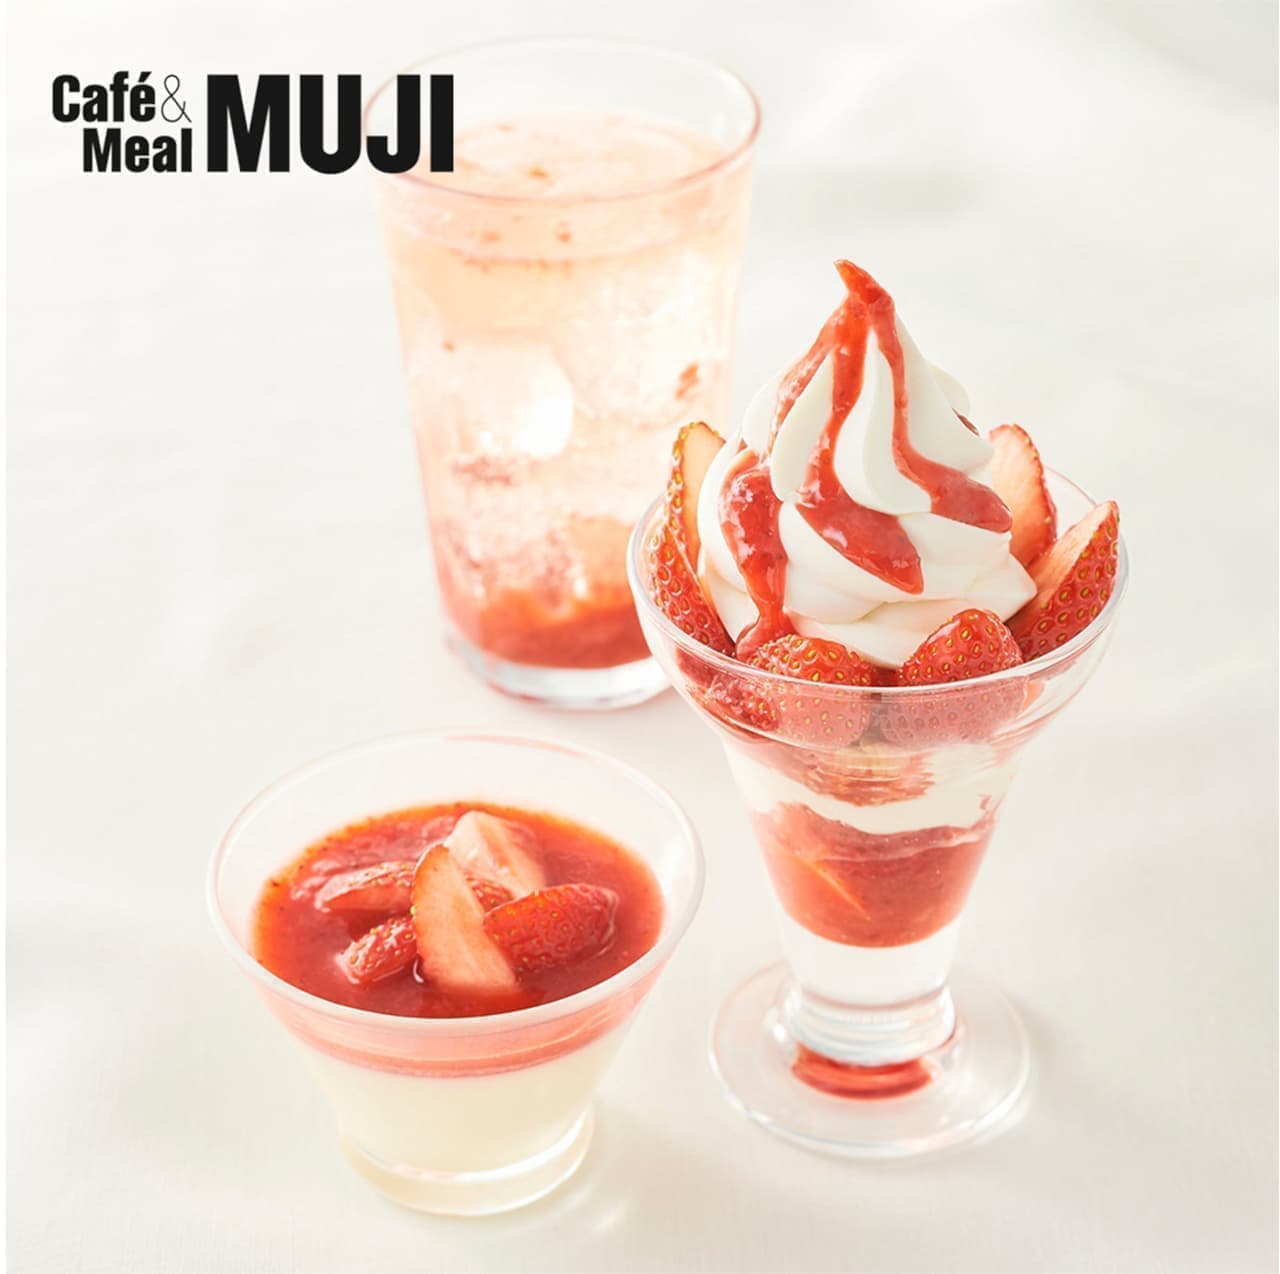 Cafe & Meal MUJI "Strawberry Dessert"